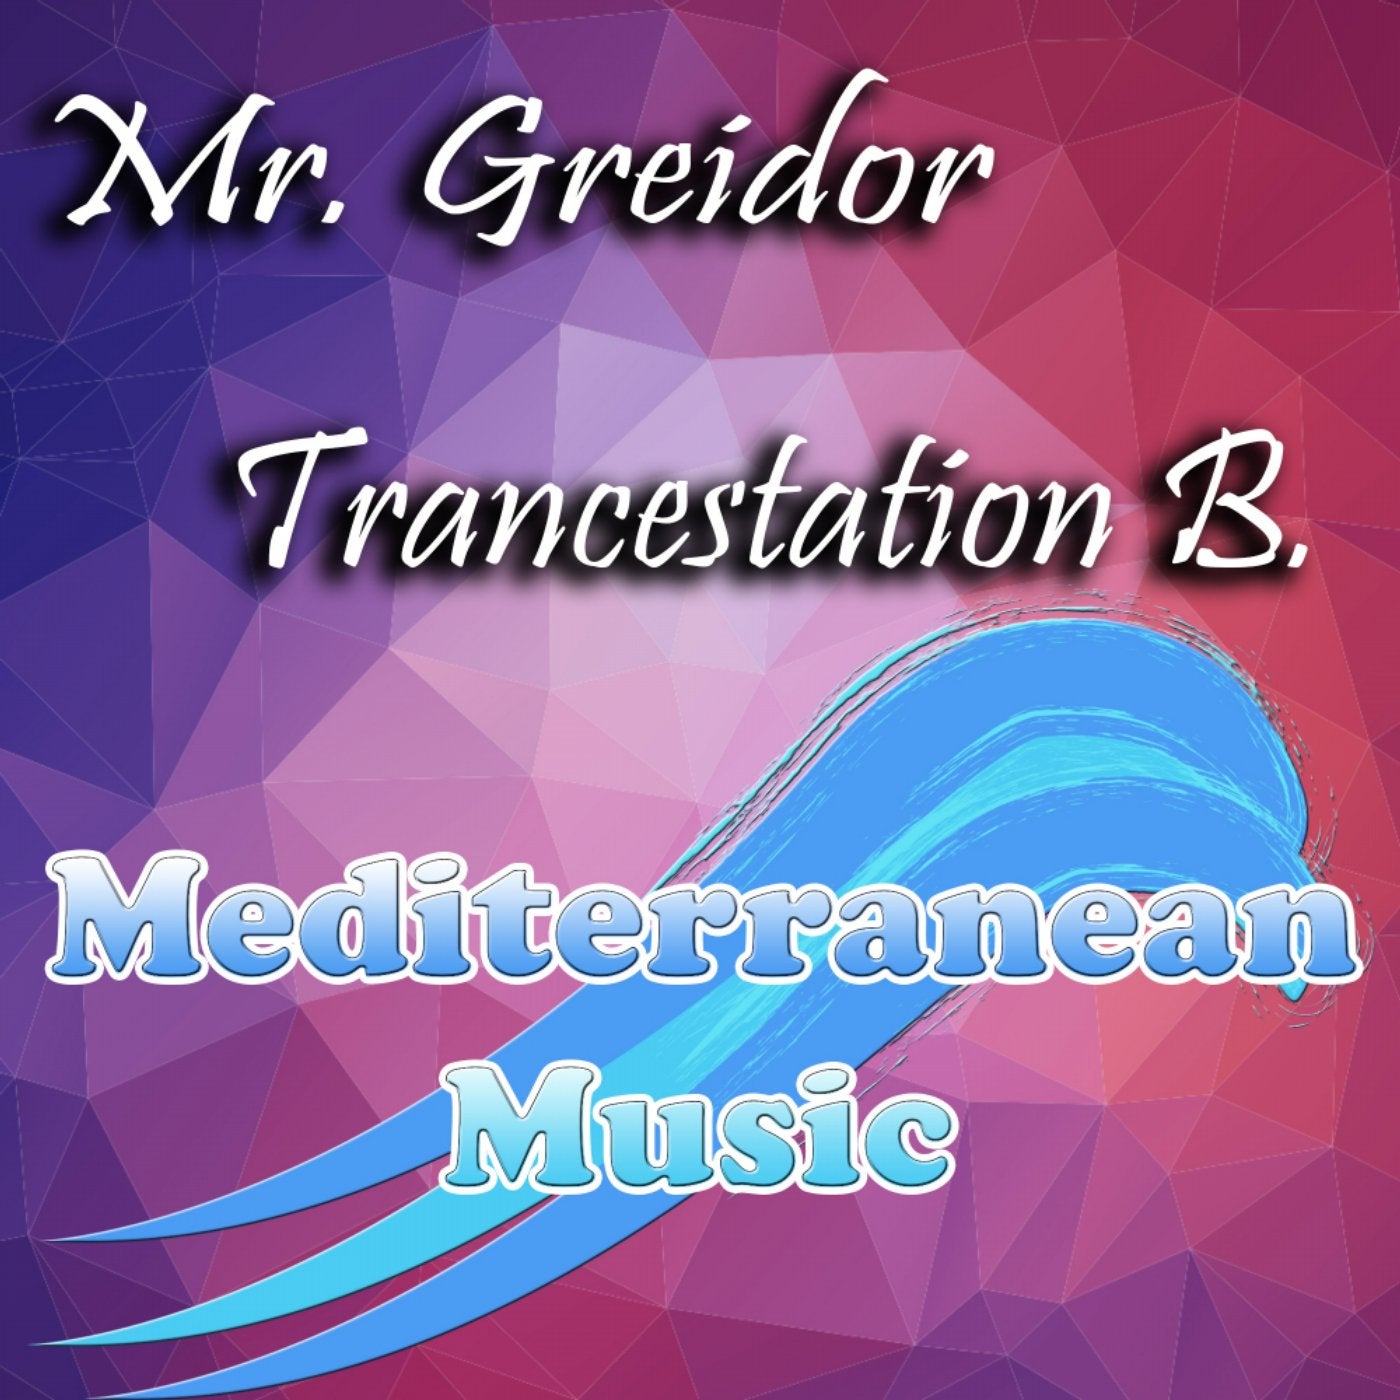 Trancestation B. (Hardstationclub Mix)